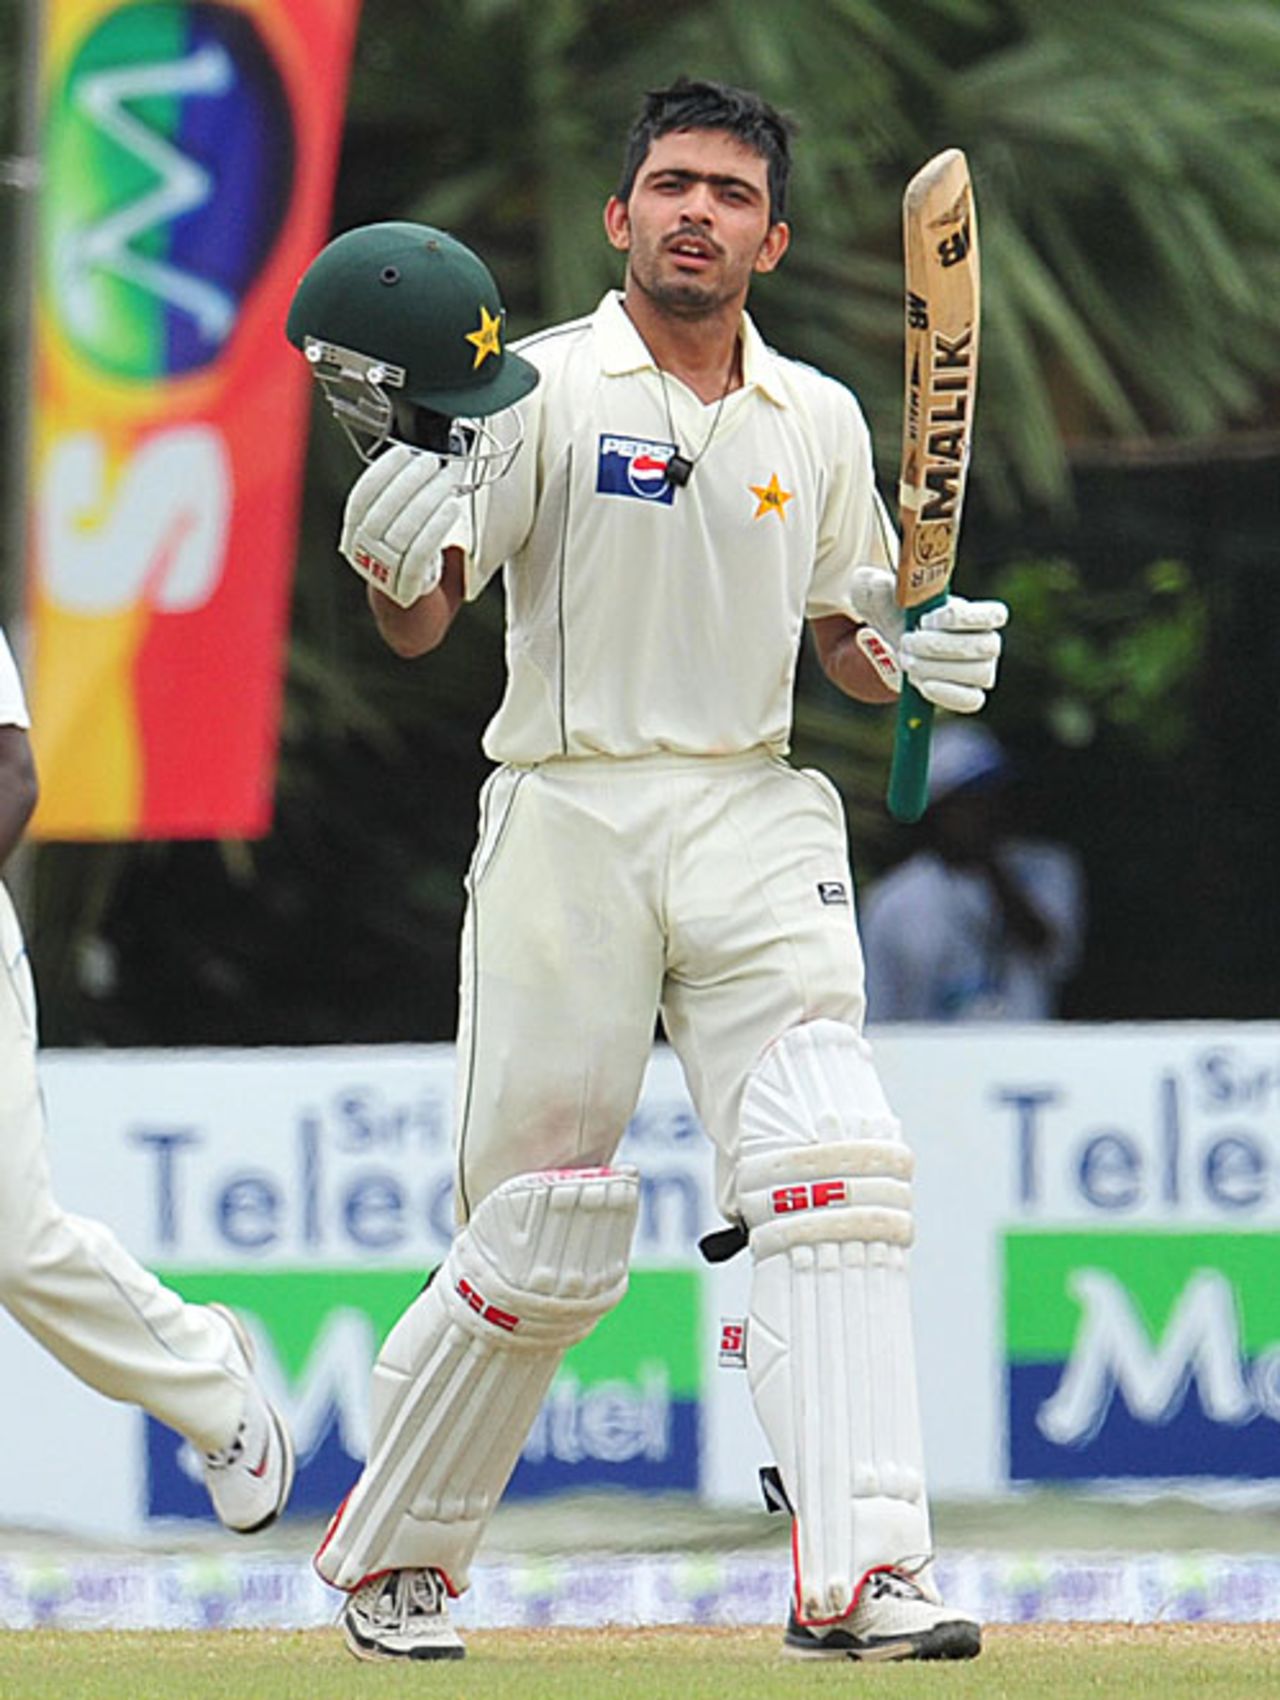 Fawad Alam raises his bat after reaching 150, Sri Lanka v Pakistan, 2nd Test, Colombo, 3rd day, July 14, 2009 